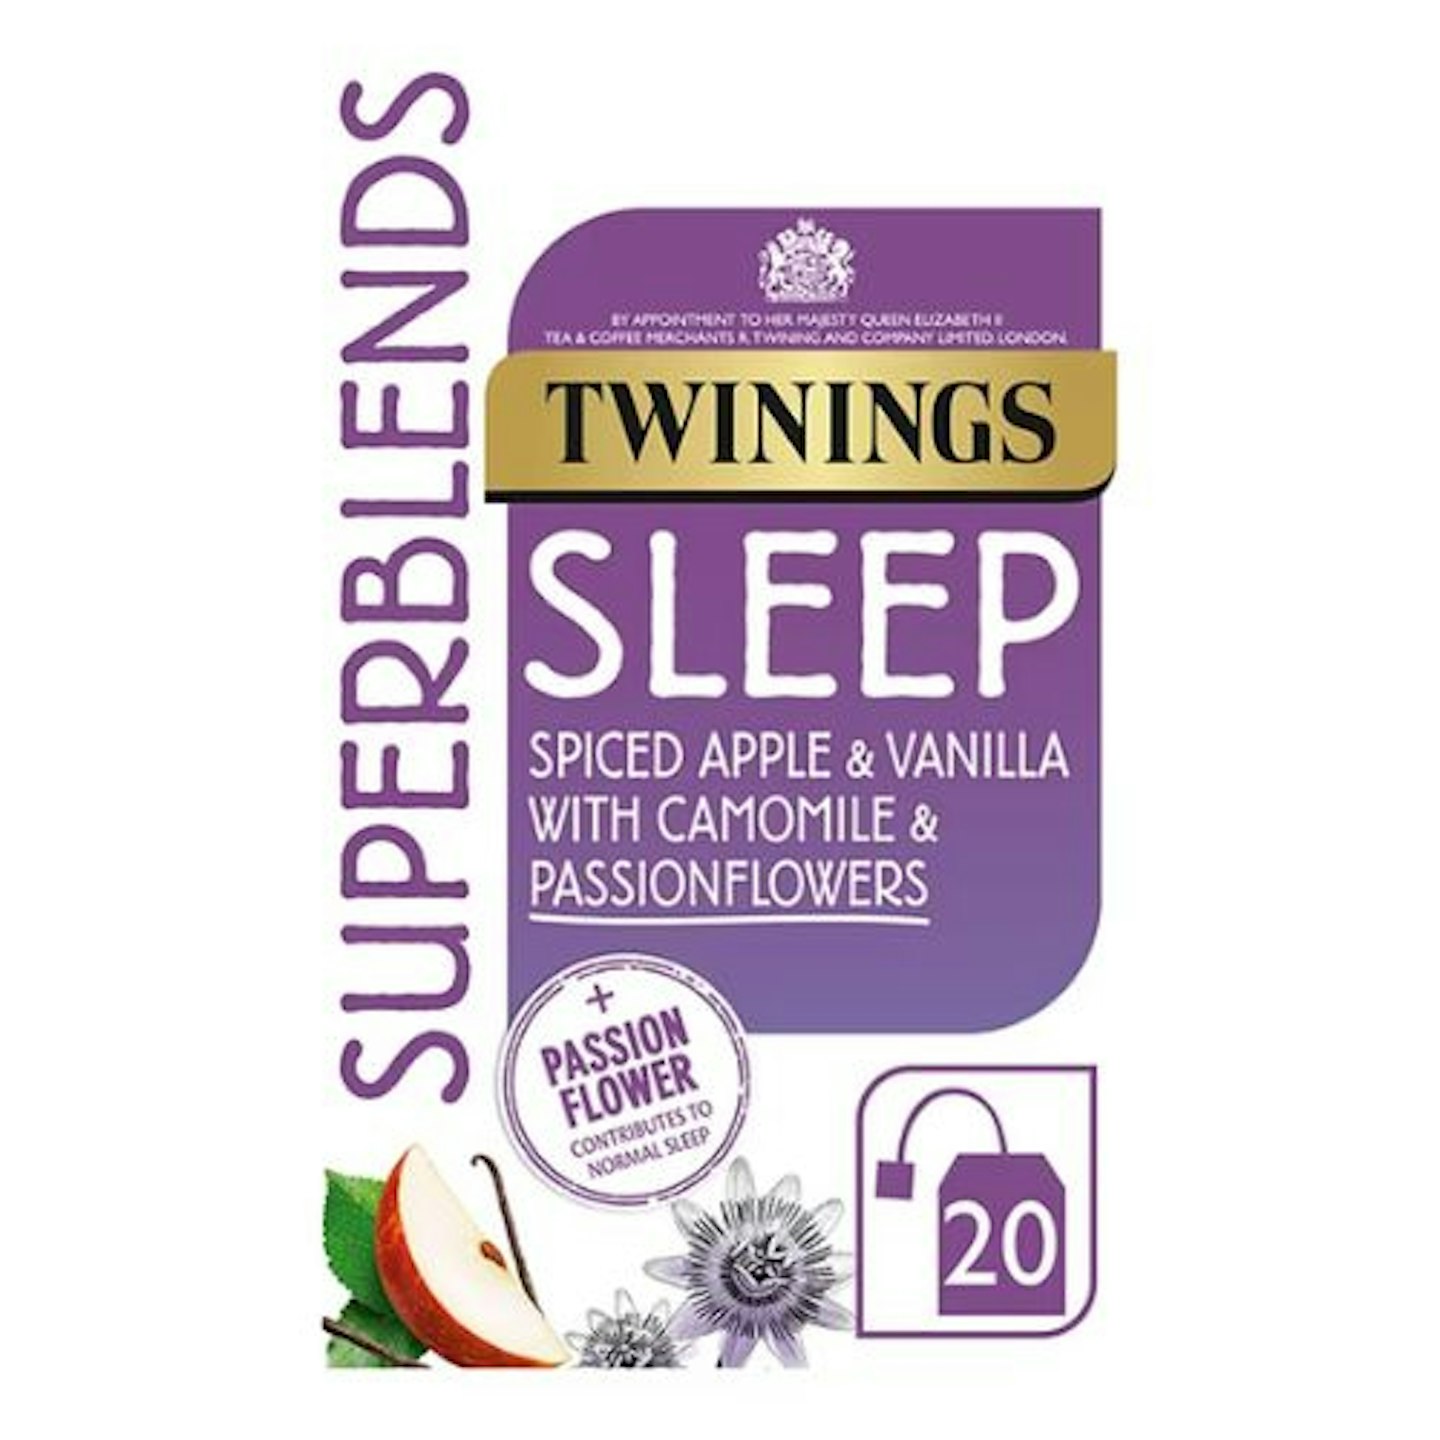 Superblends Sleep 20 Tea Bags